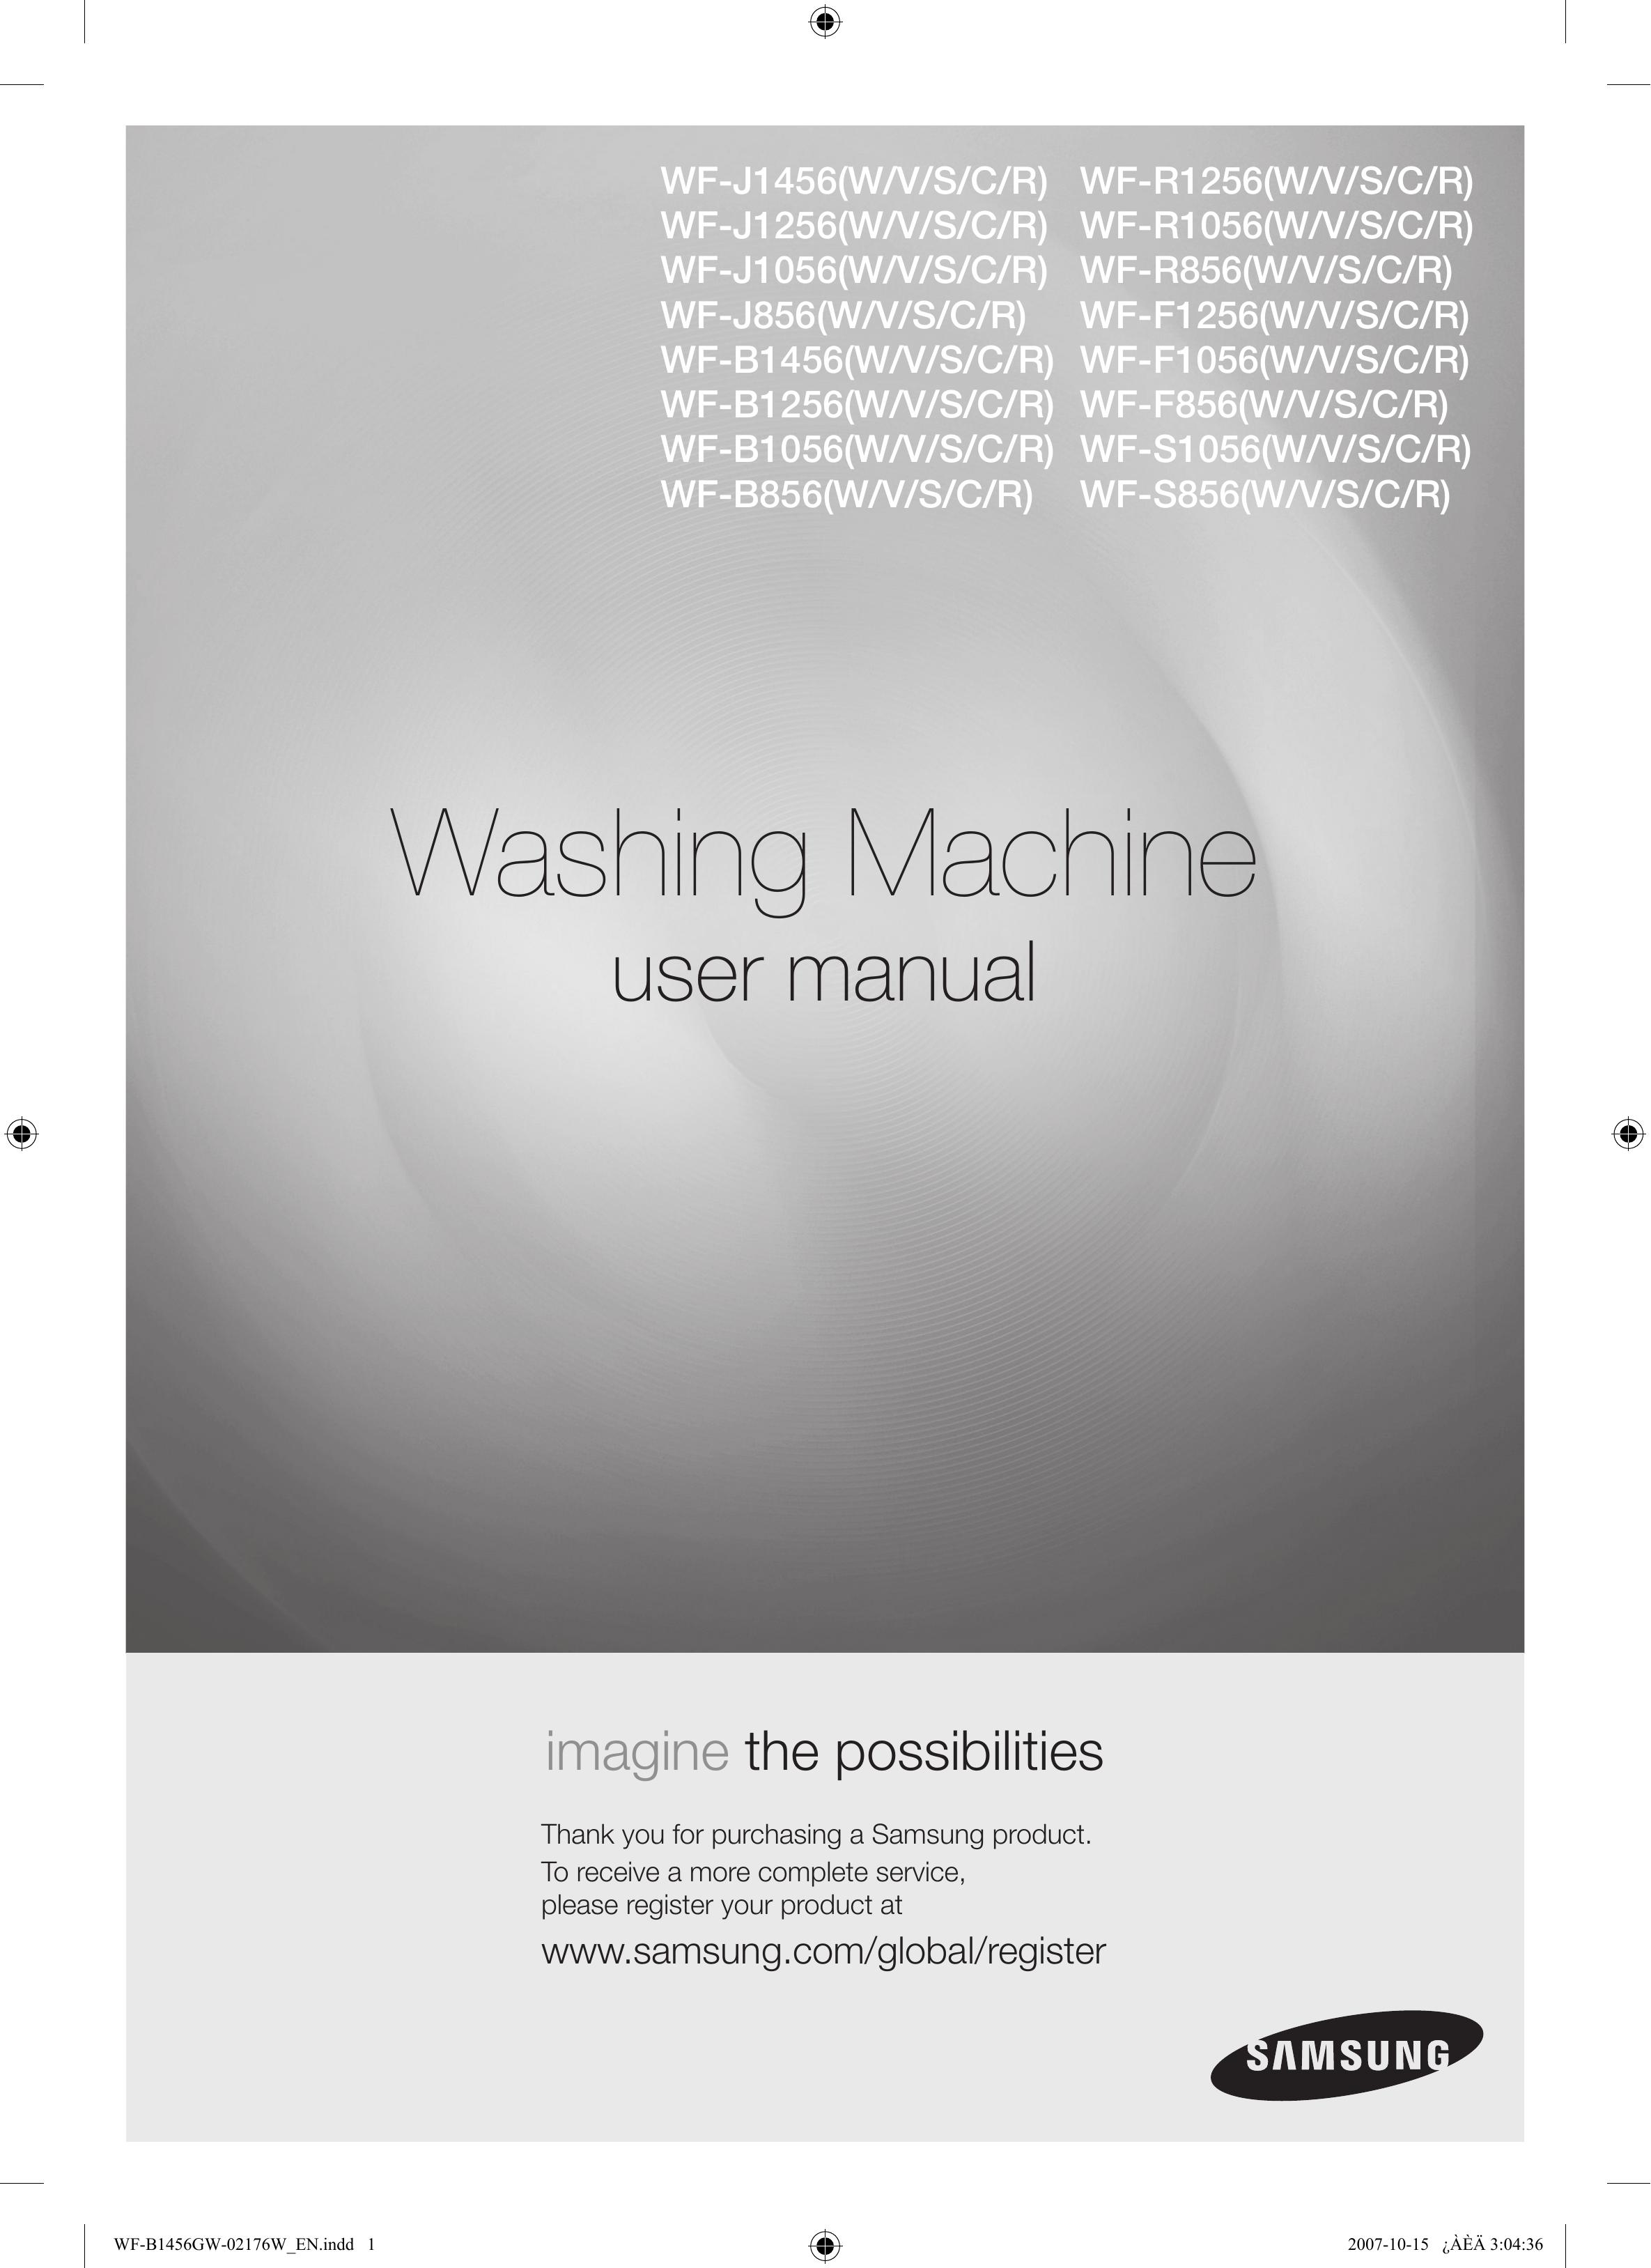 Samsung WF-F1256 Washer/Dryer User Manual